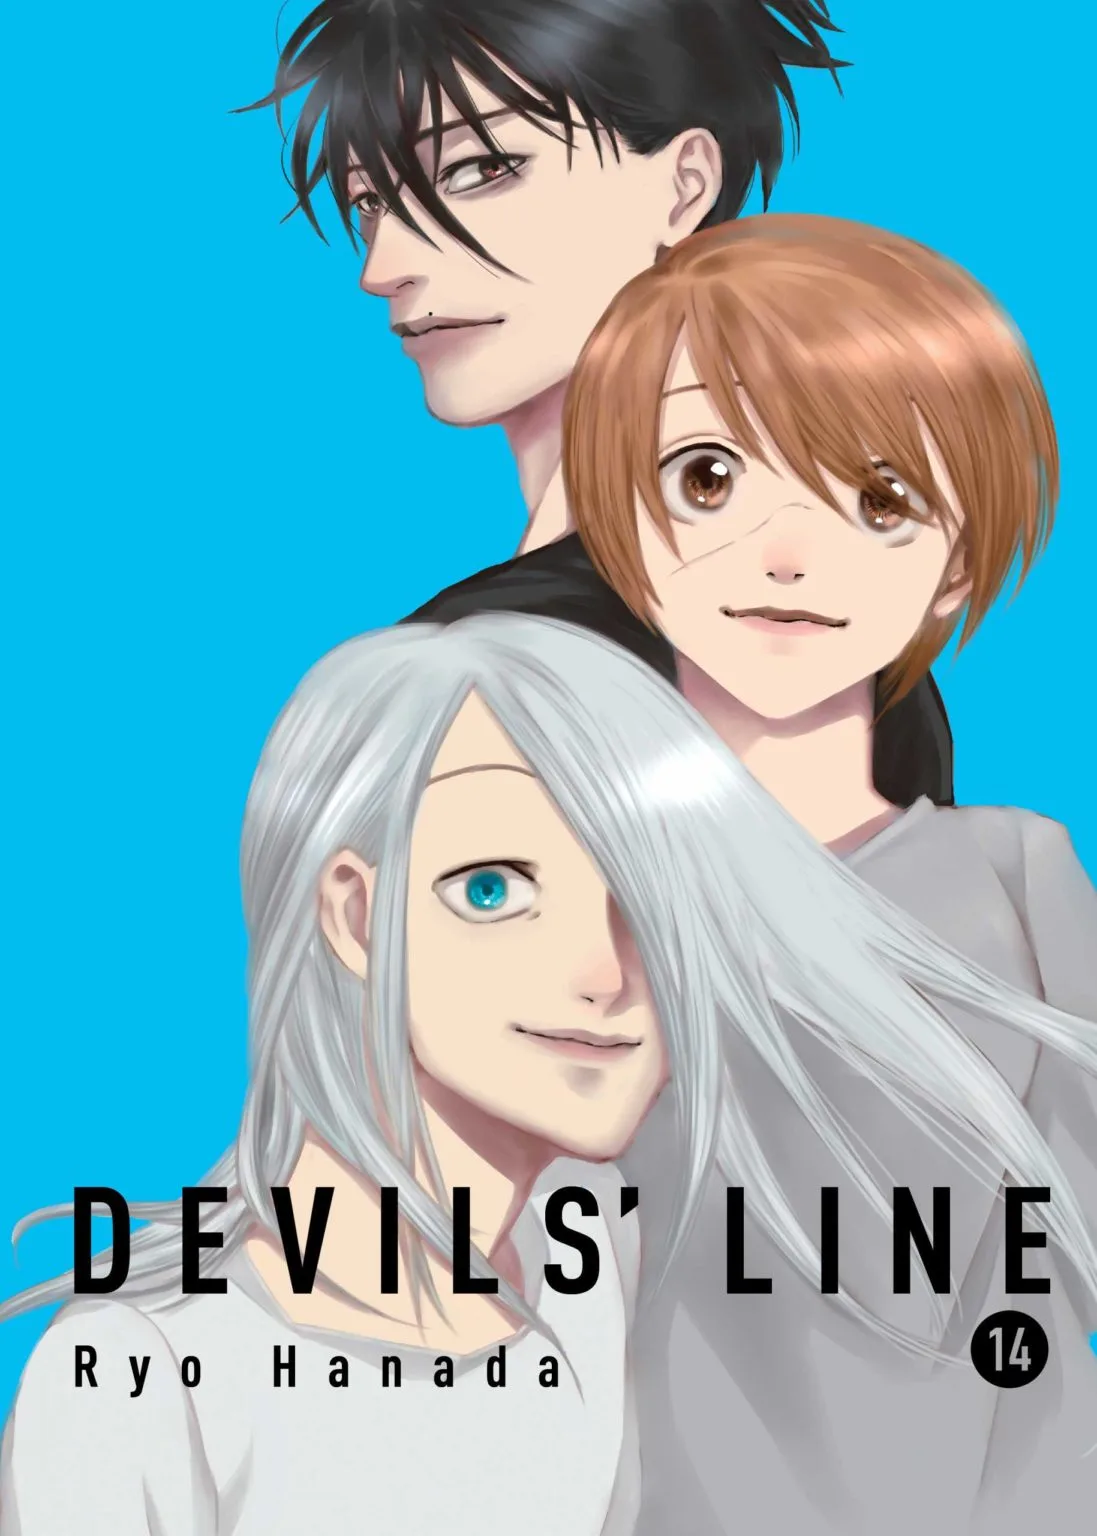 Devils Line Volume 14